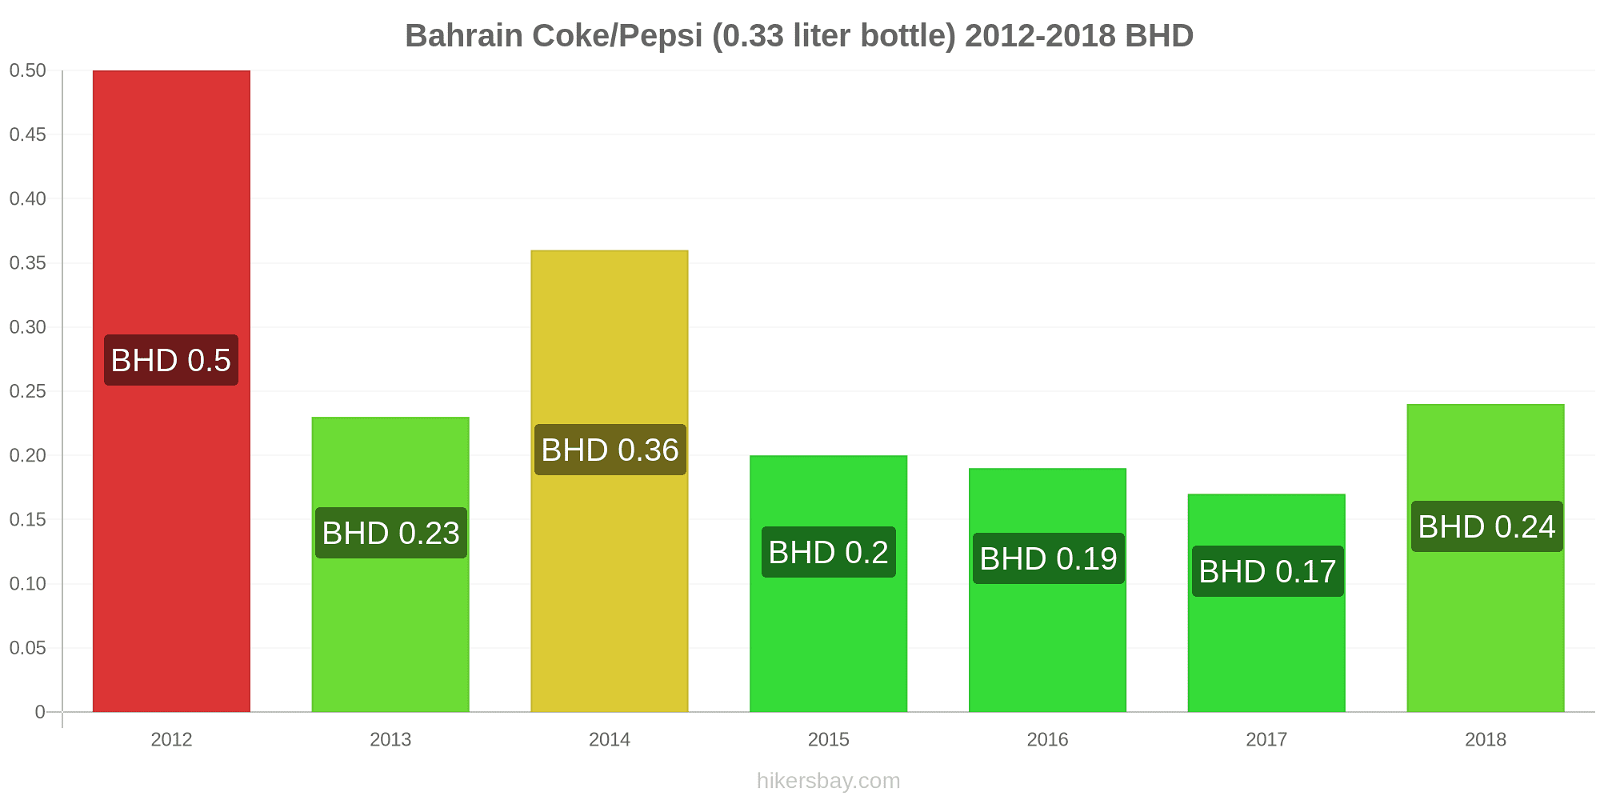 Bahrain price changes Coke/Pepsi (0.33 liter bottle) hikersbay.com